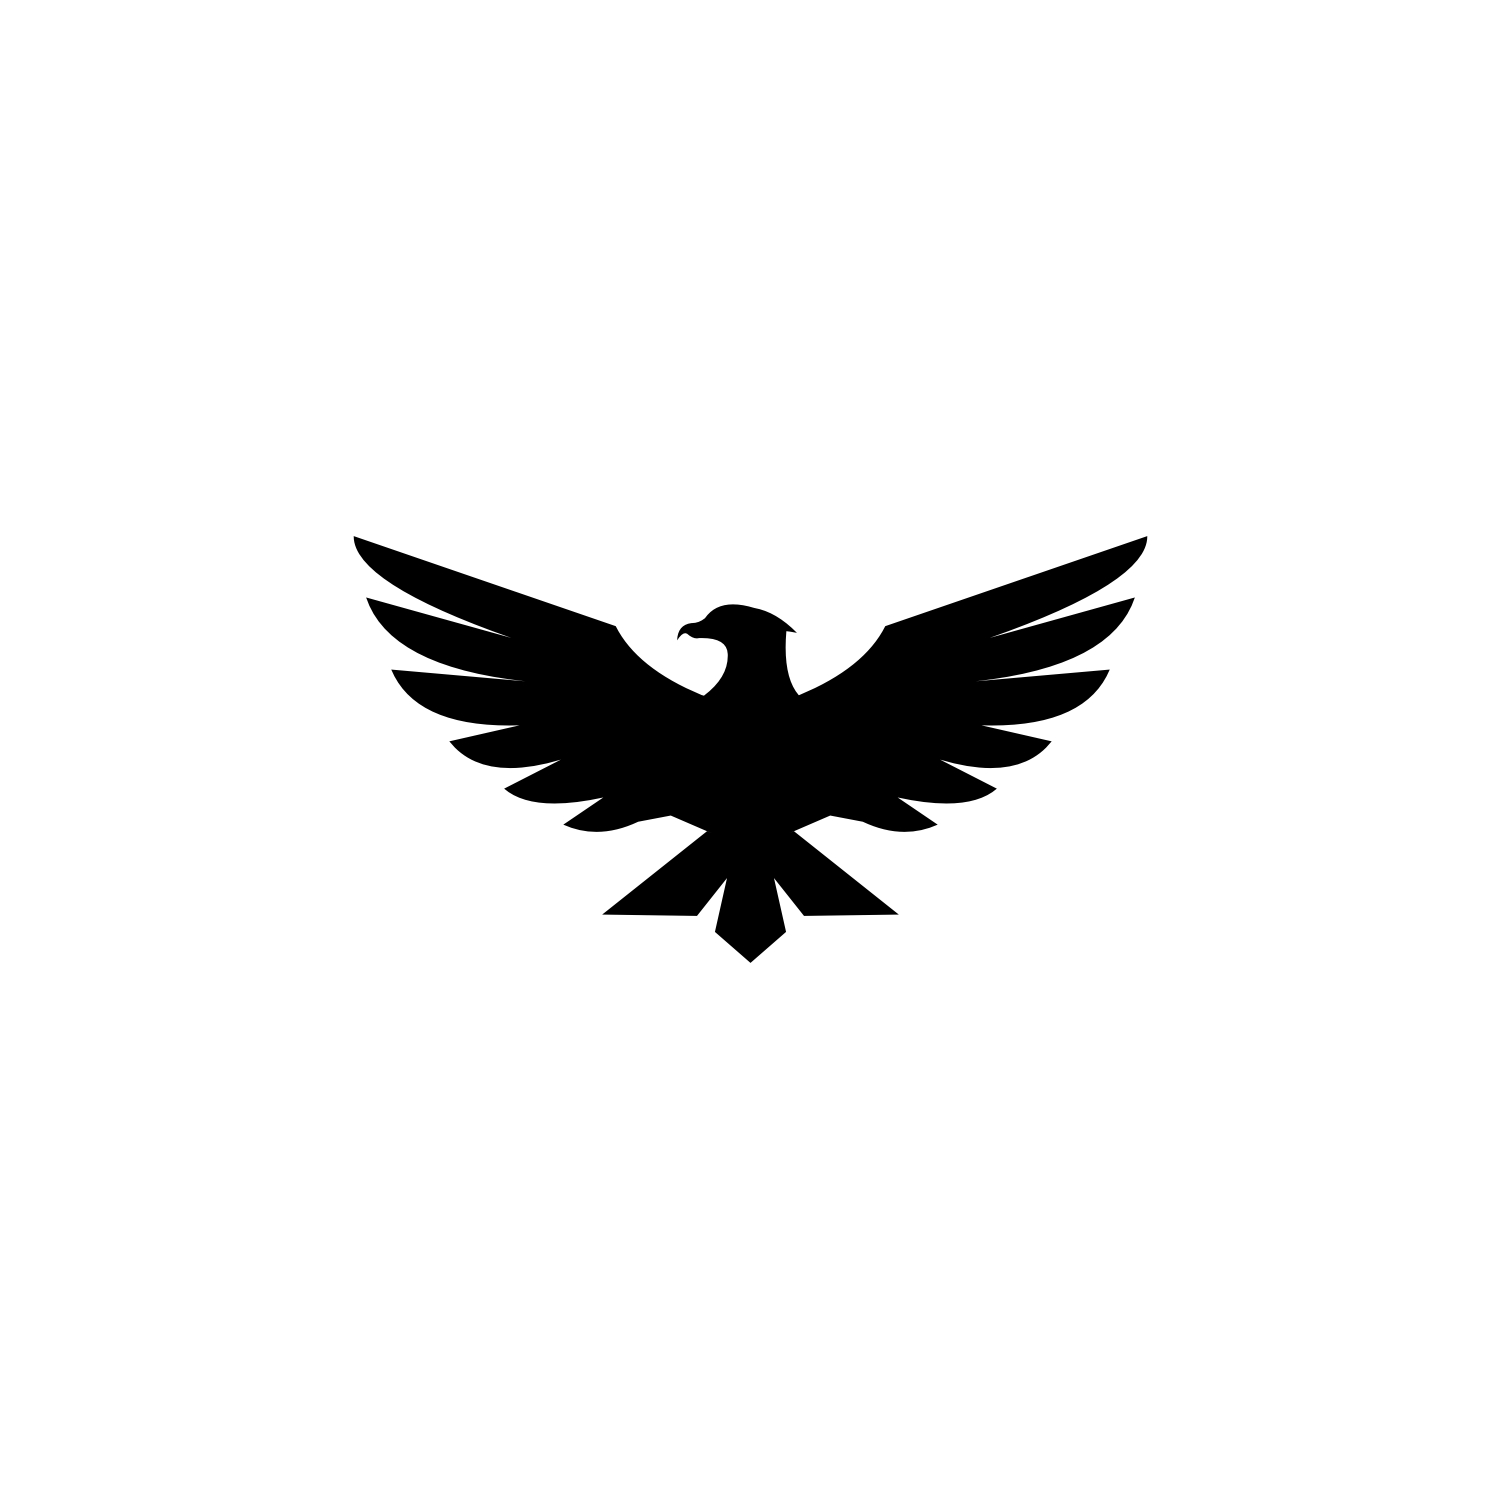 Eagle Logo Images